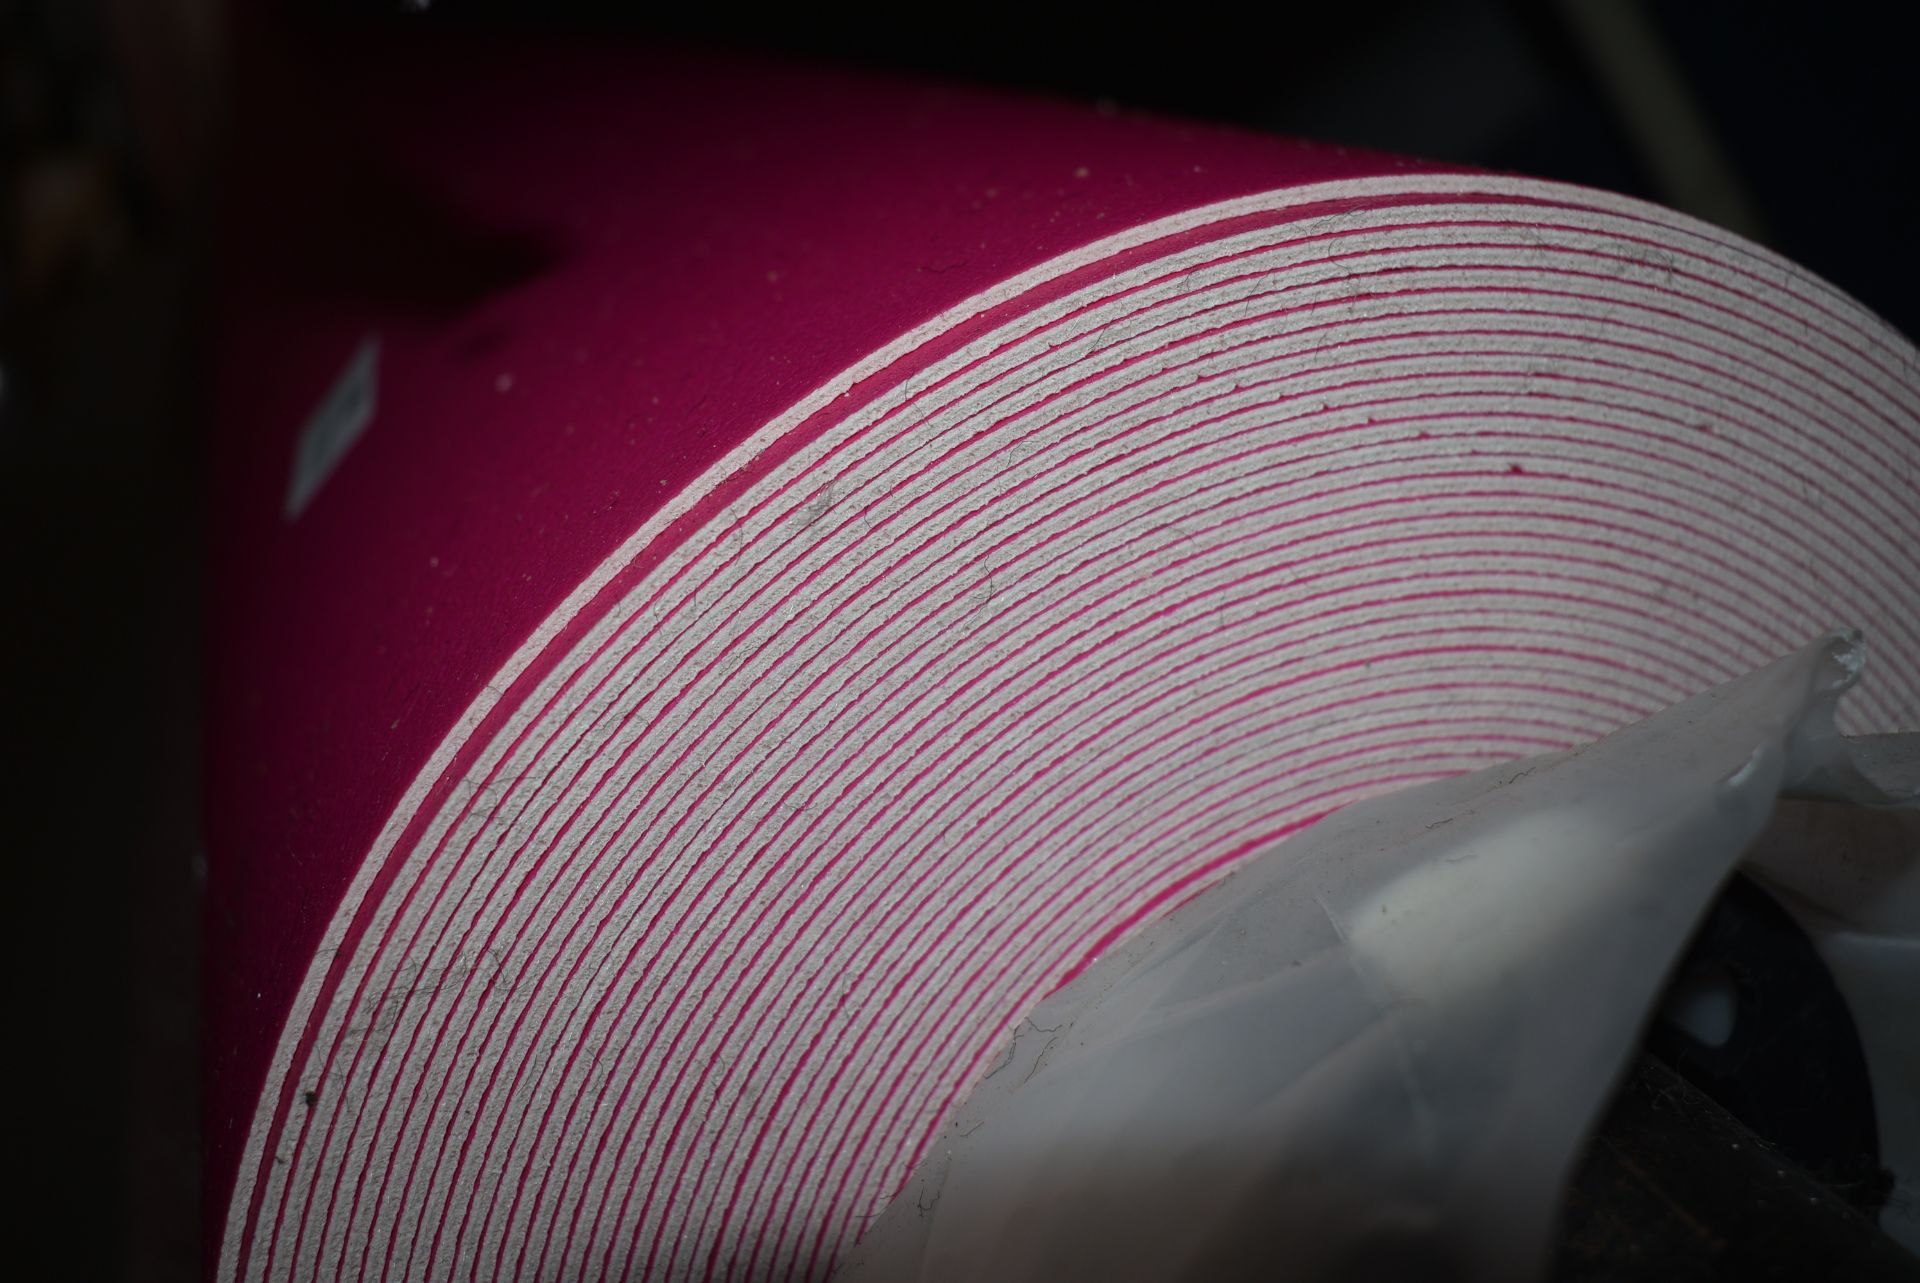 4m wide Roll of Pink Vinyl Flooring - Image 2 of 2